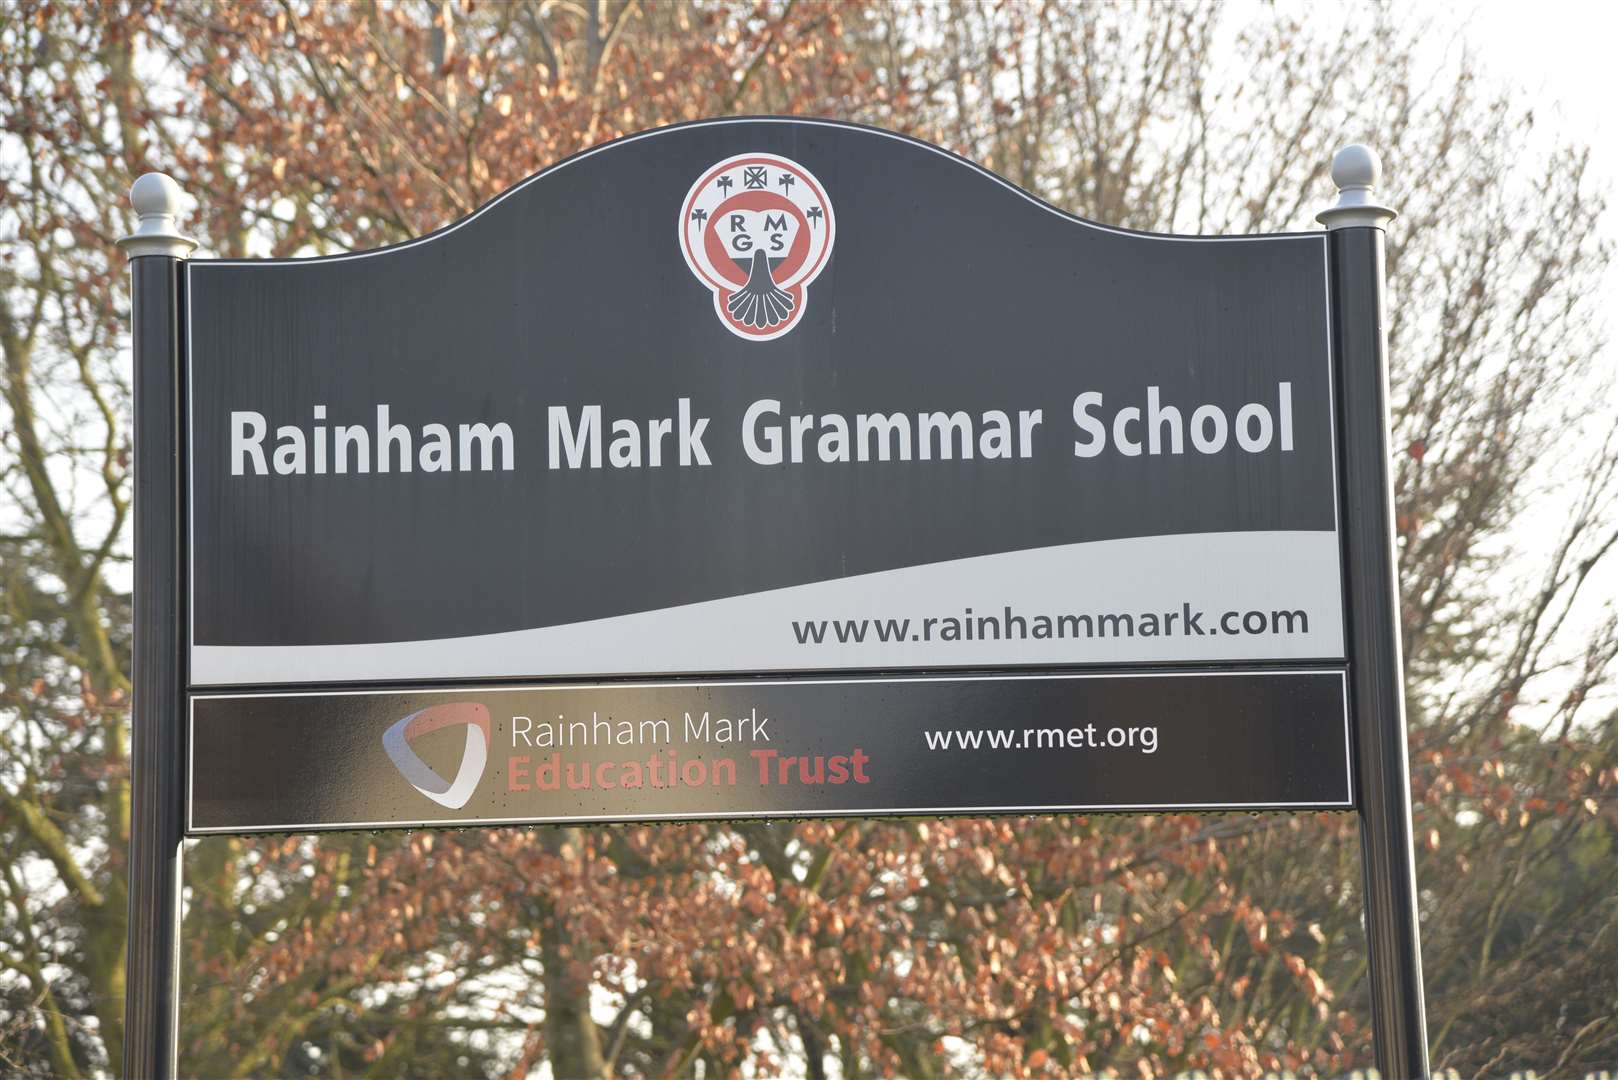 Rainham Mark Grammar is a mixed gender school